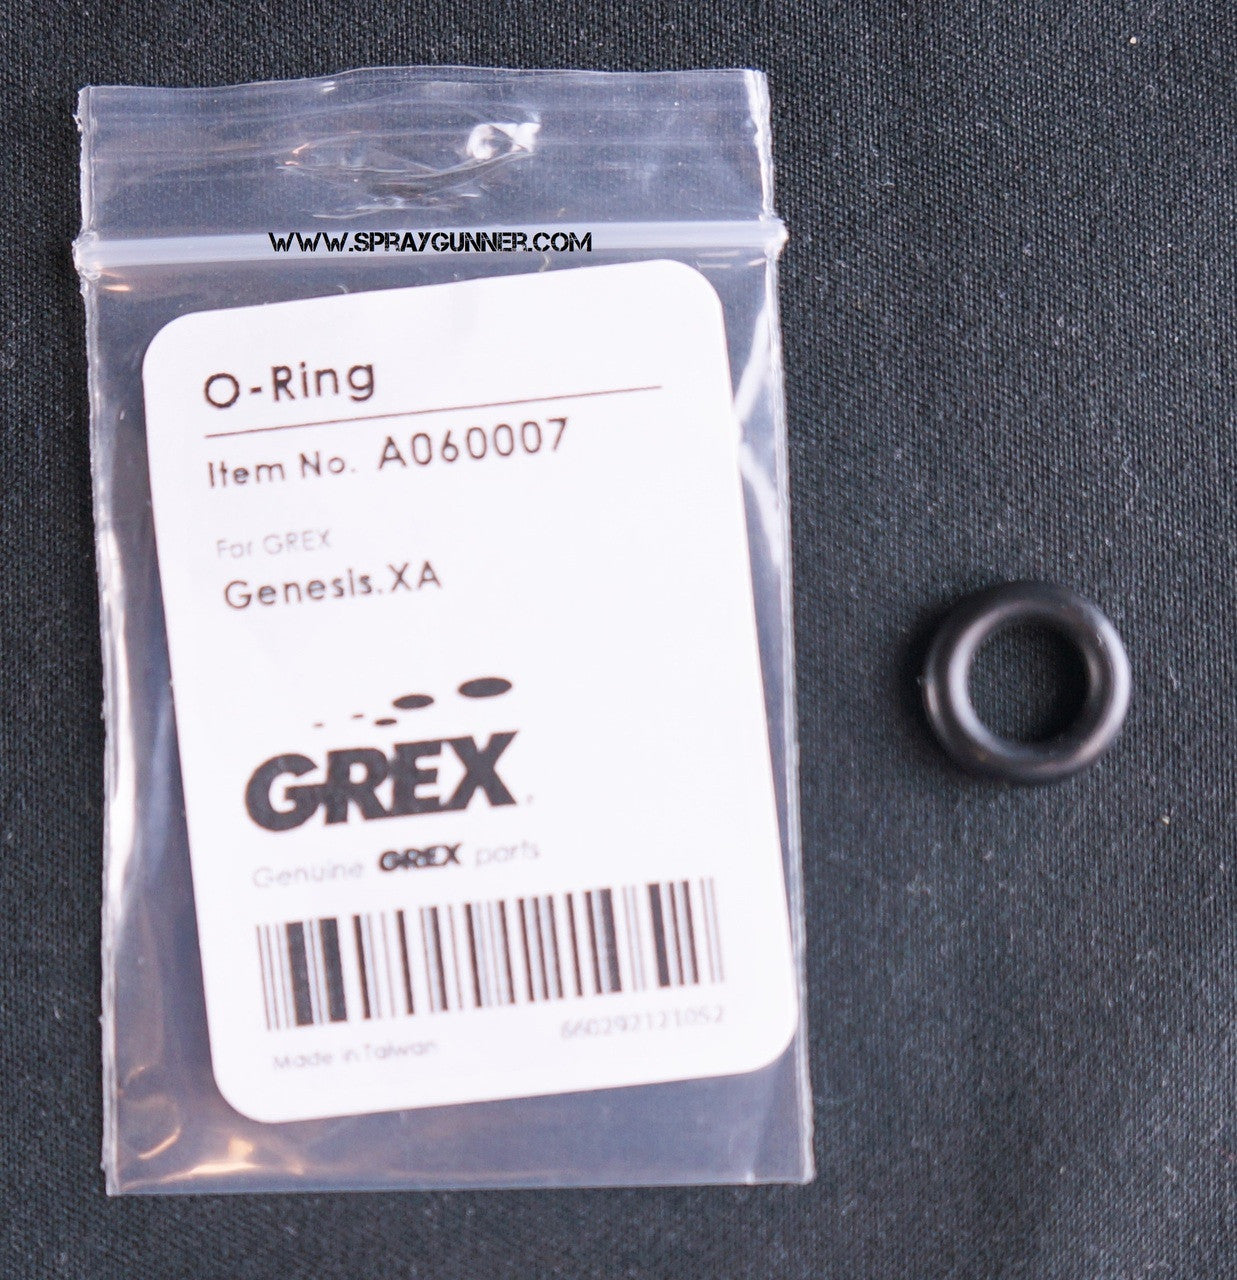 Grex O-Ring A060007 A060007 Grex Airbrush